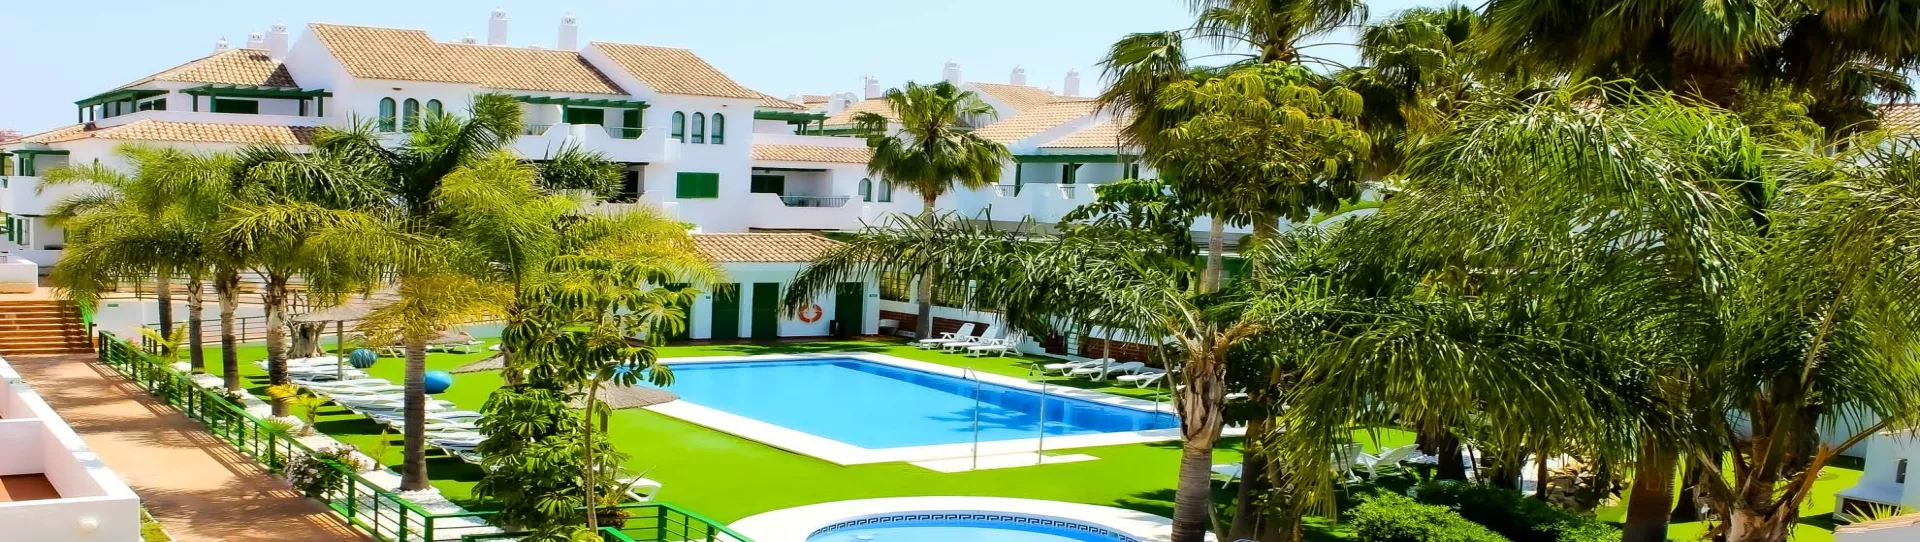 Spain golf holidays - Hotel Apartamentos Manilva Sun - Photo 1